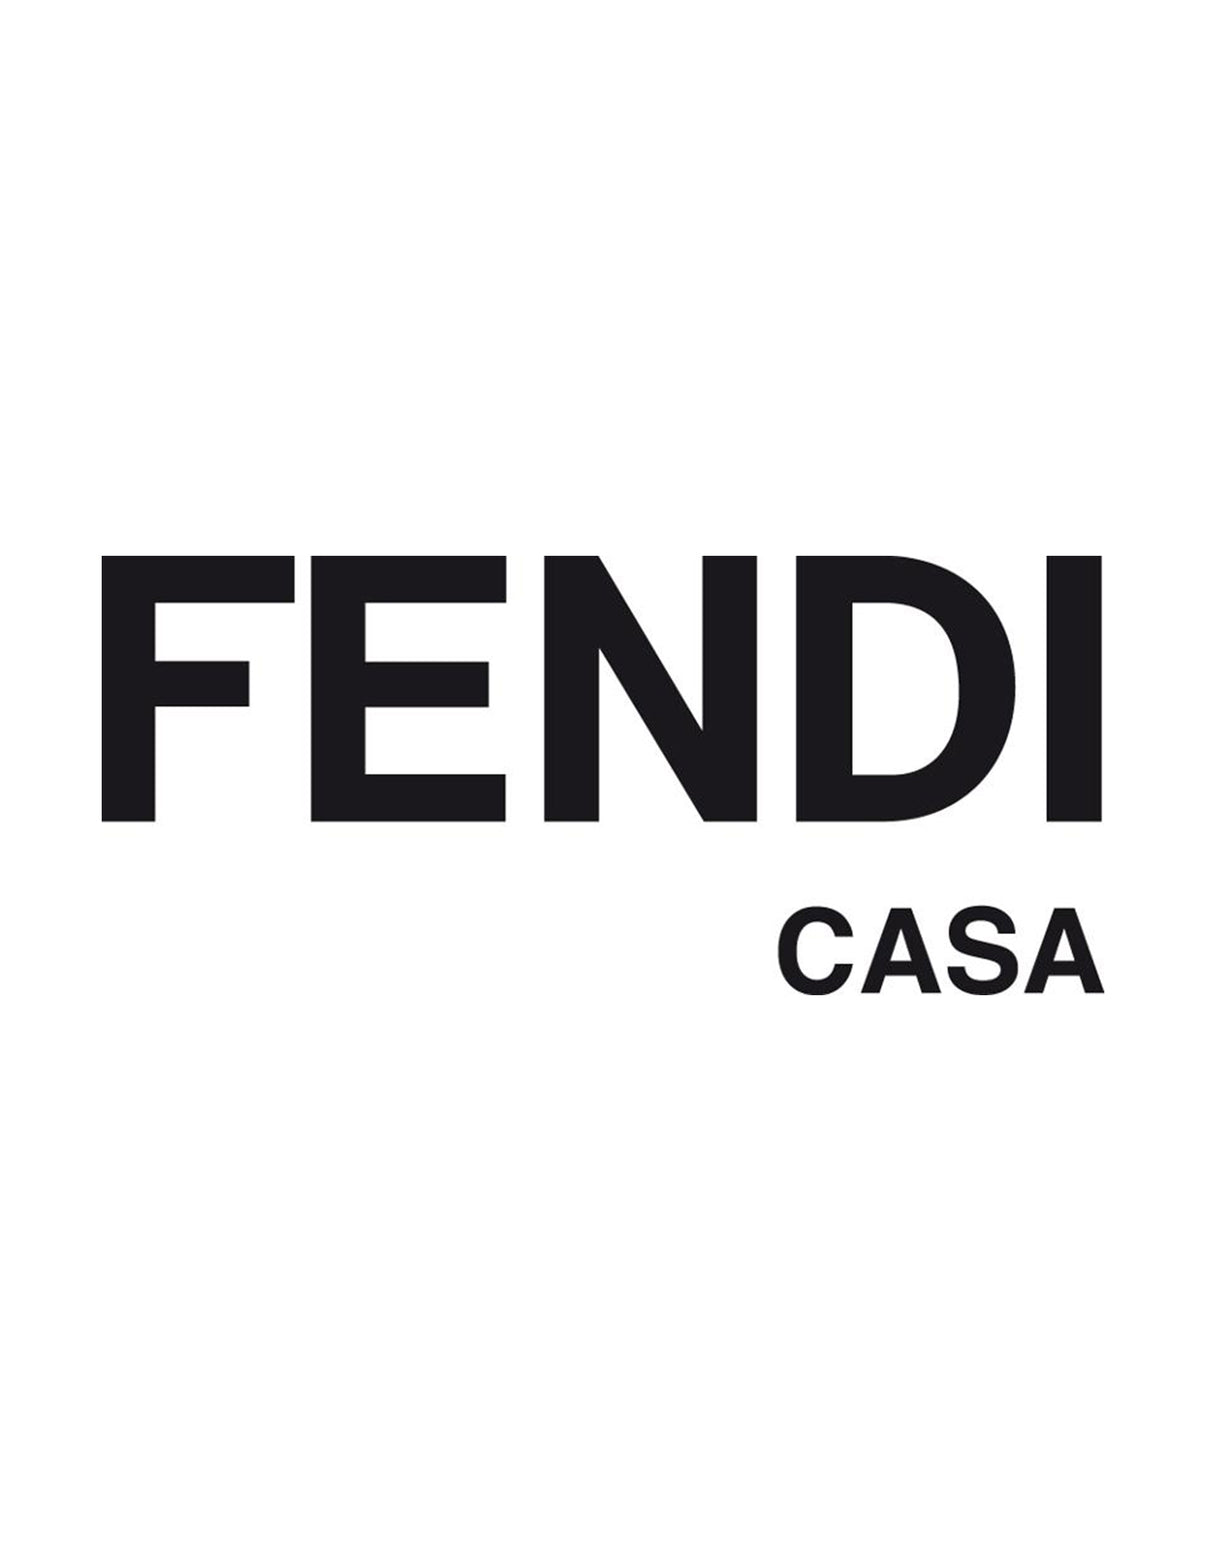 Fendi Casa Quotation (Request Info) – High Home